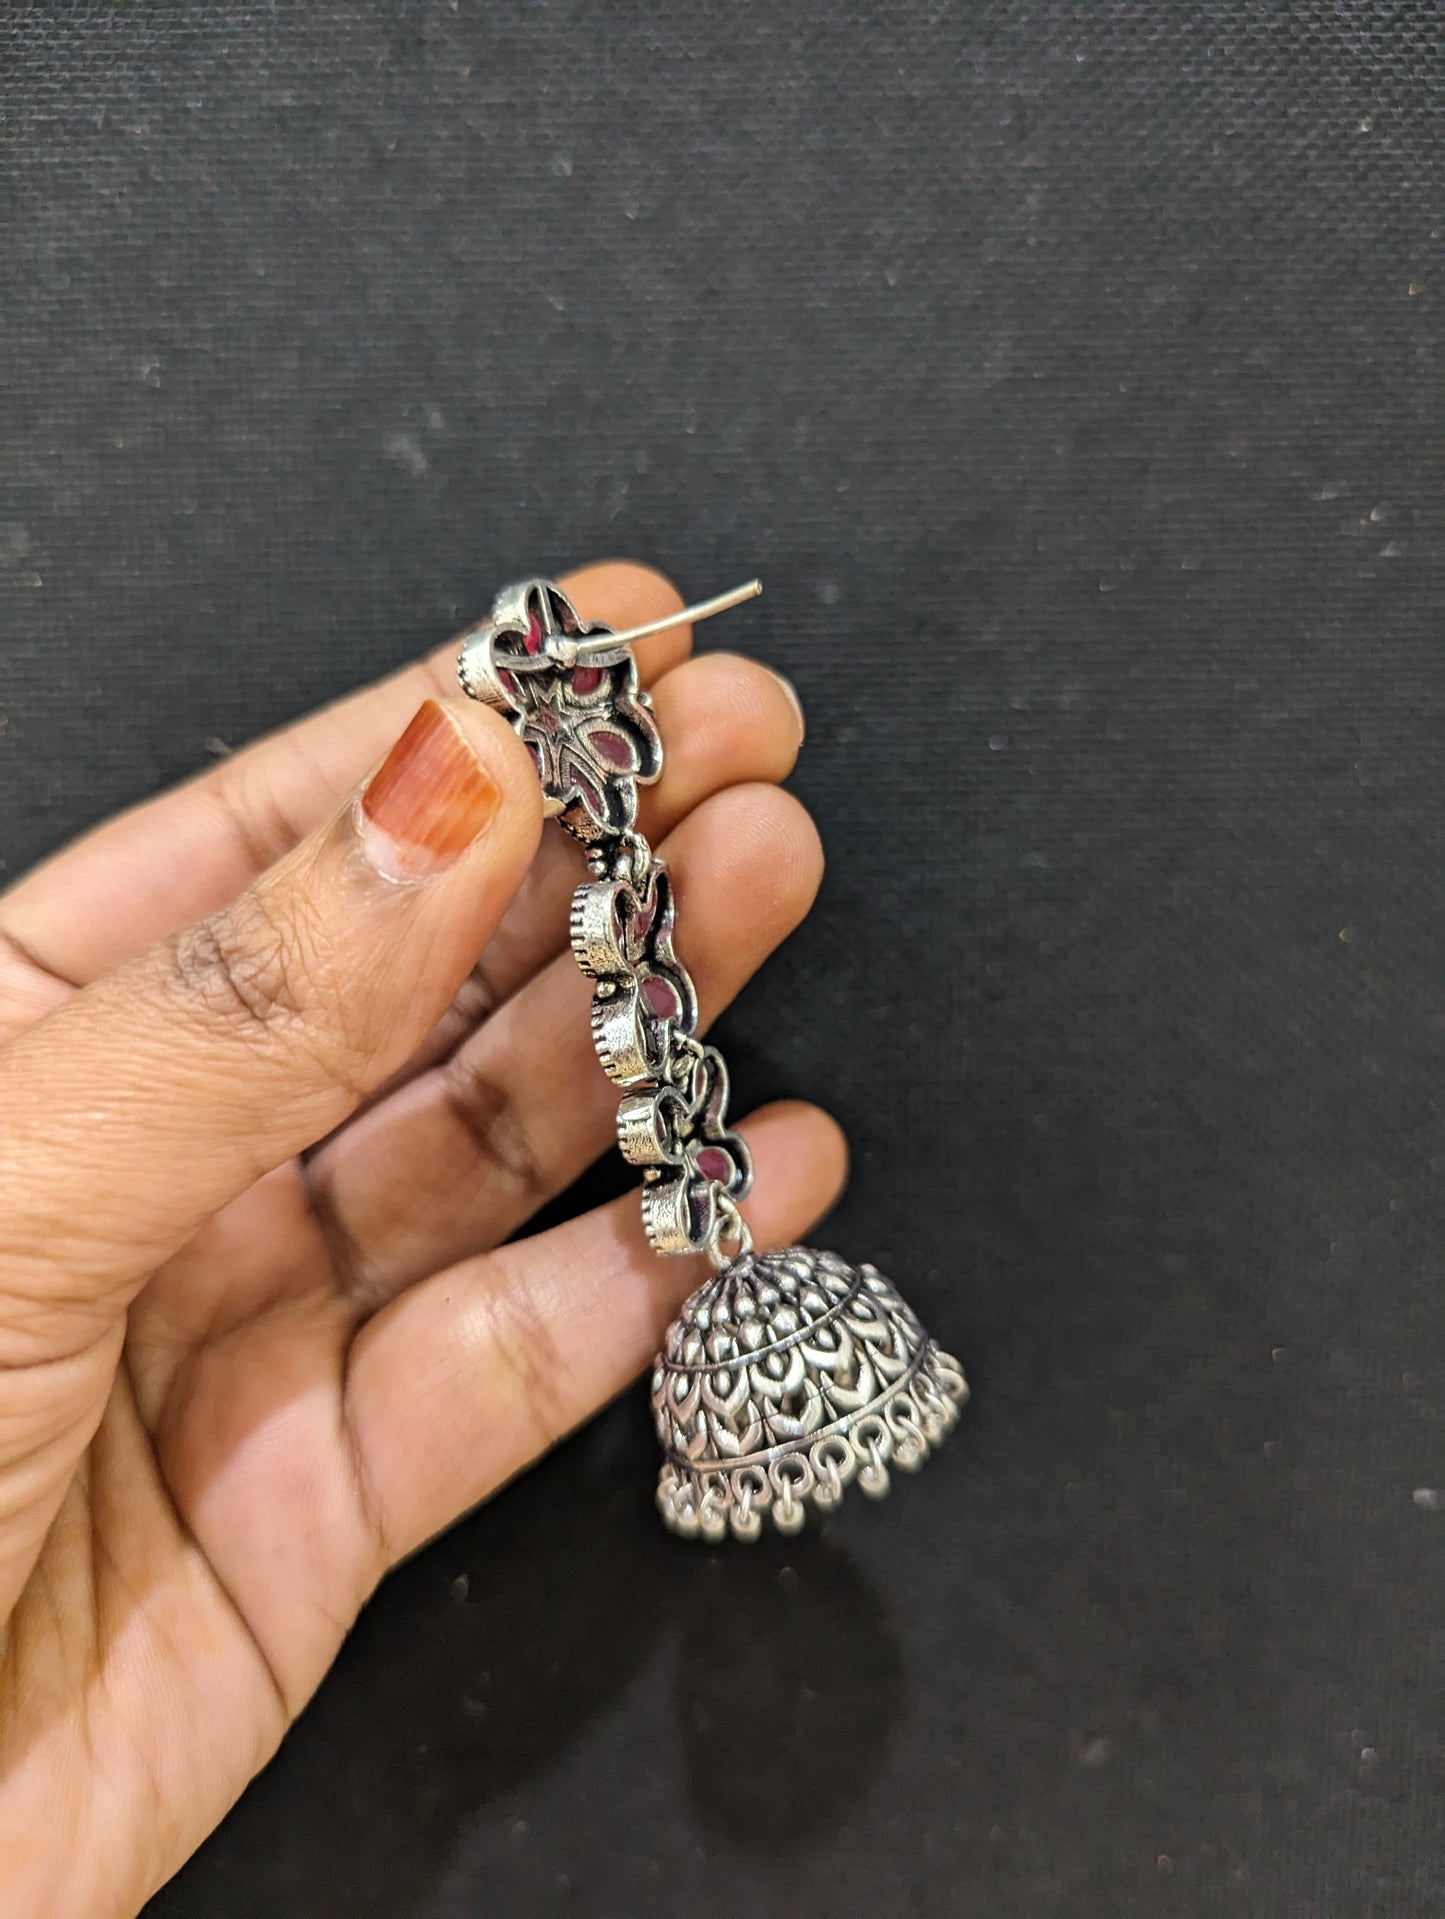 Oxidized Silver Polki Dangle Jhumka Earrings